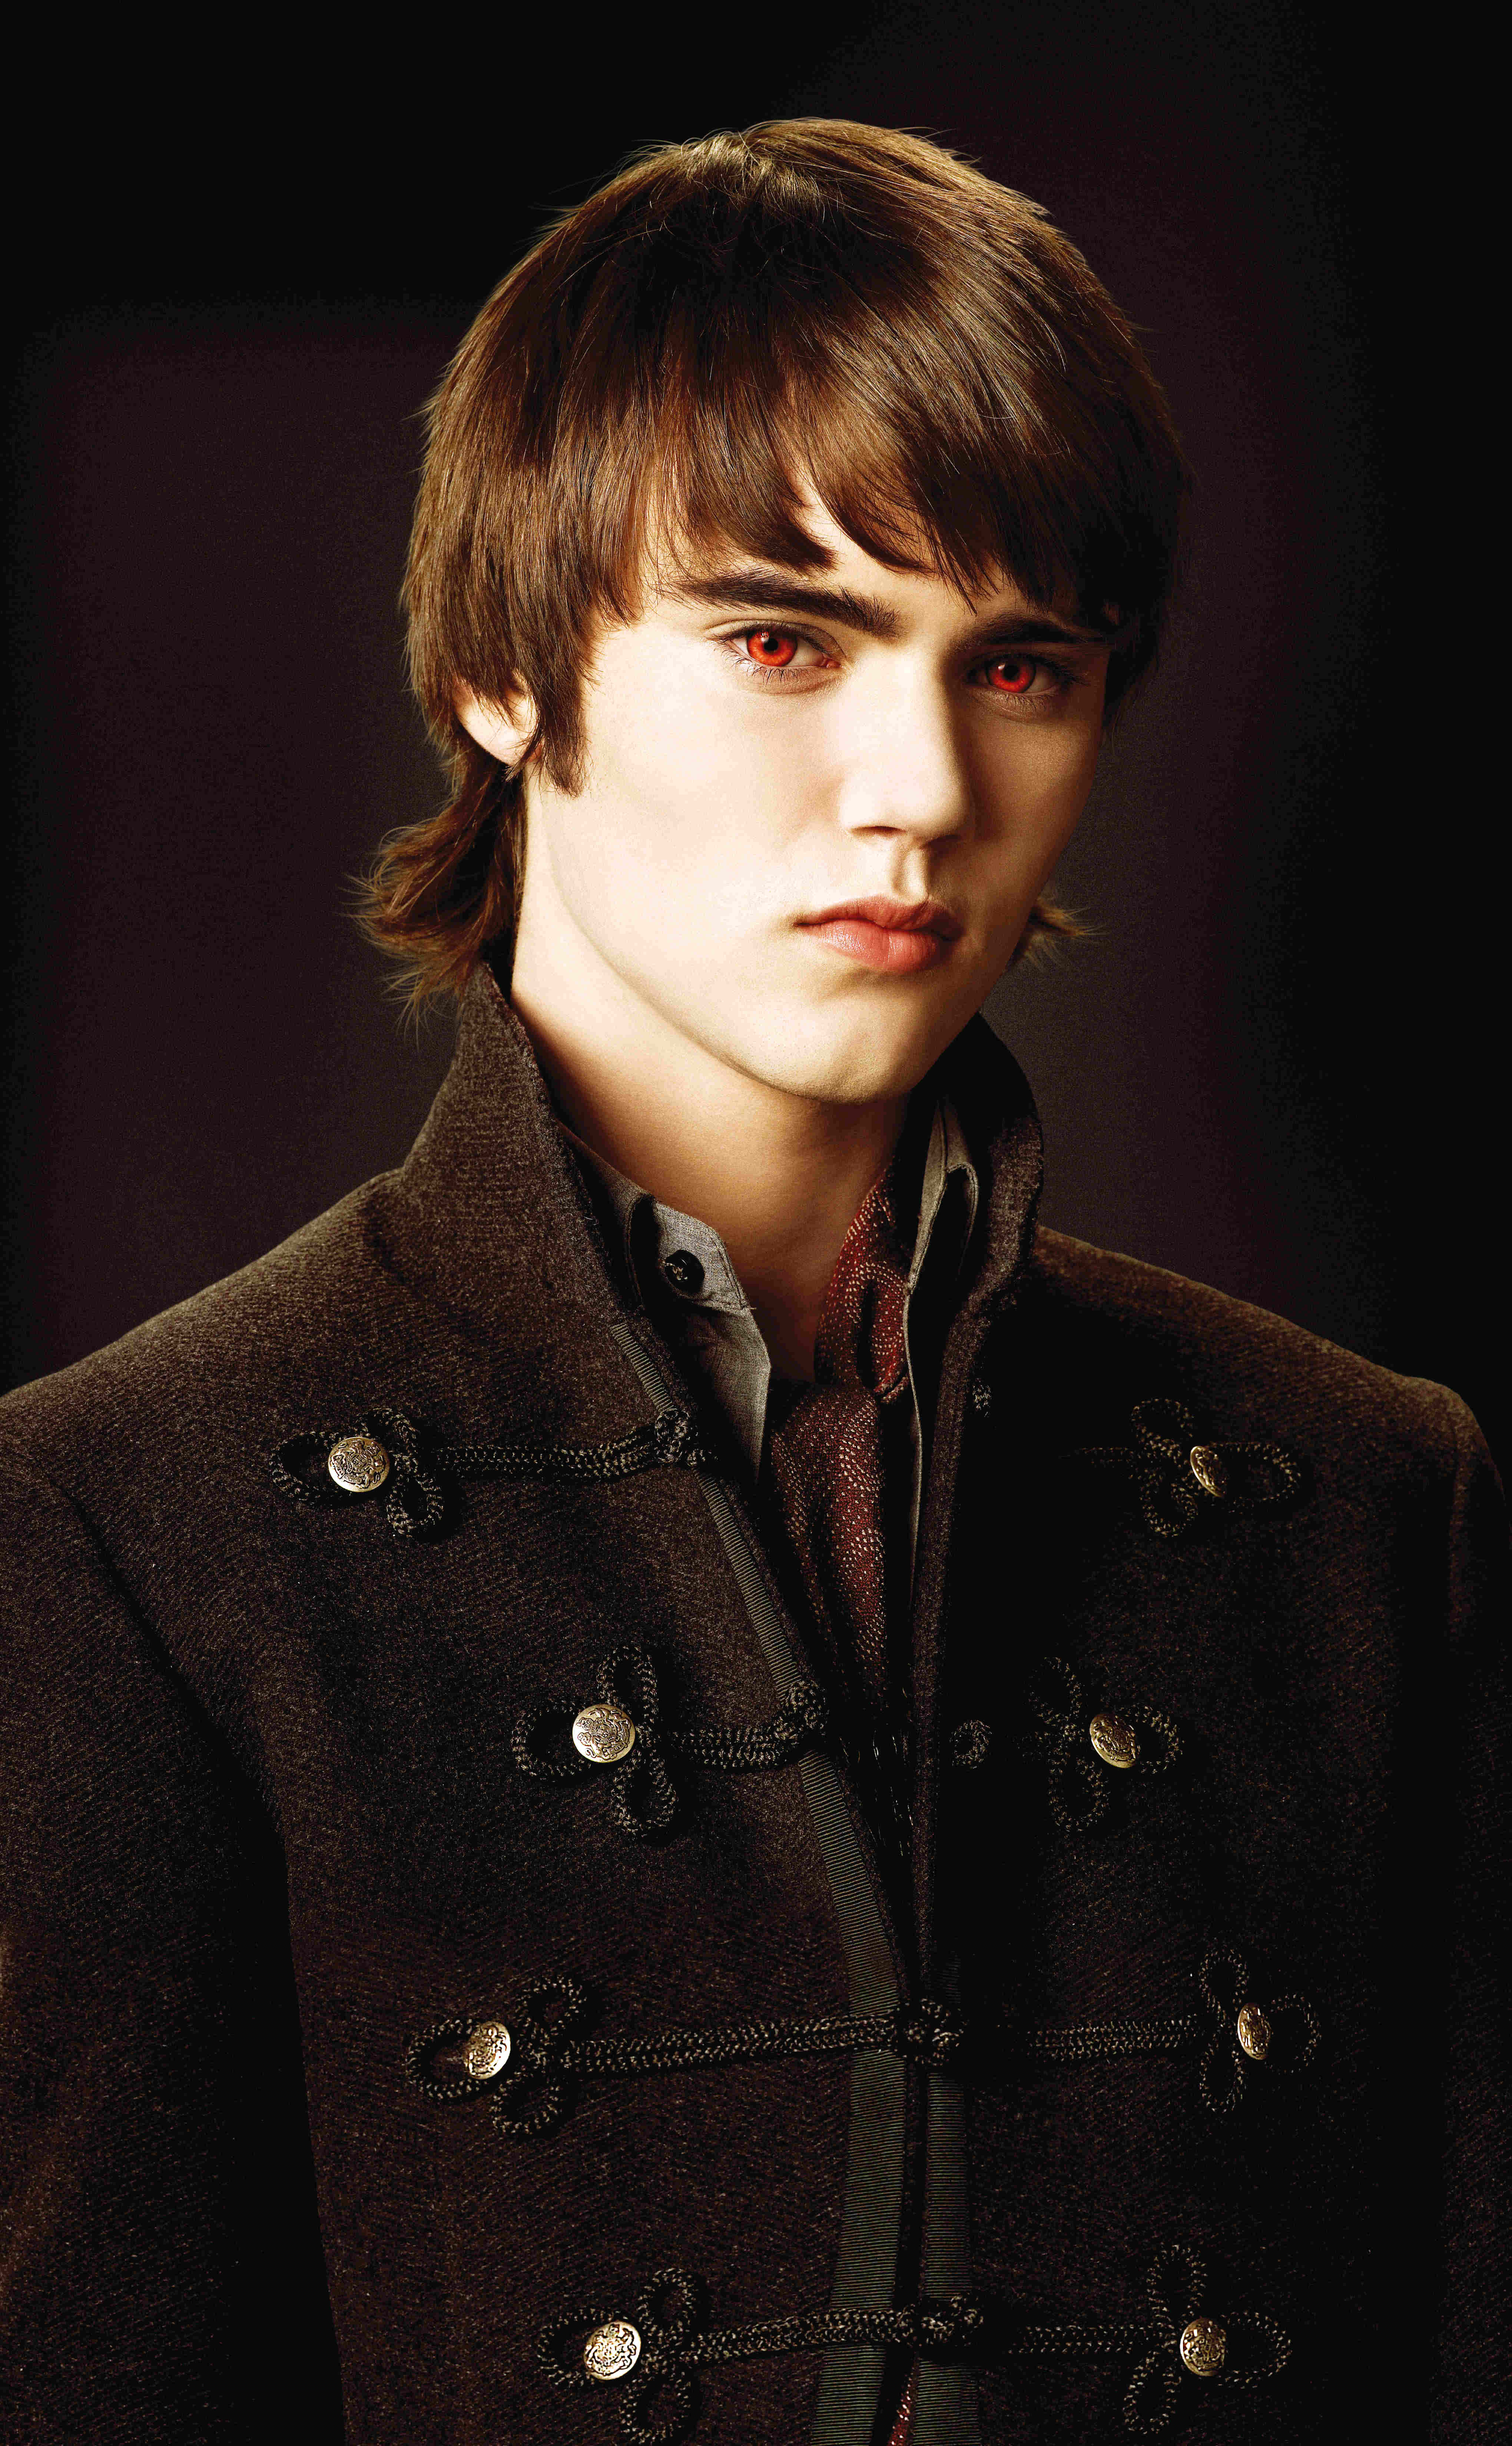 Cameron Bright stars as Alec in Summit Entertainment's The Twilight Saga's New Moon (2009)